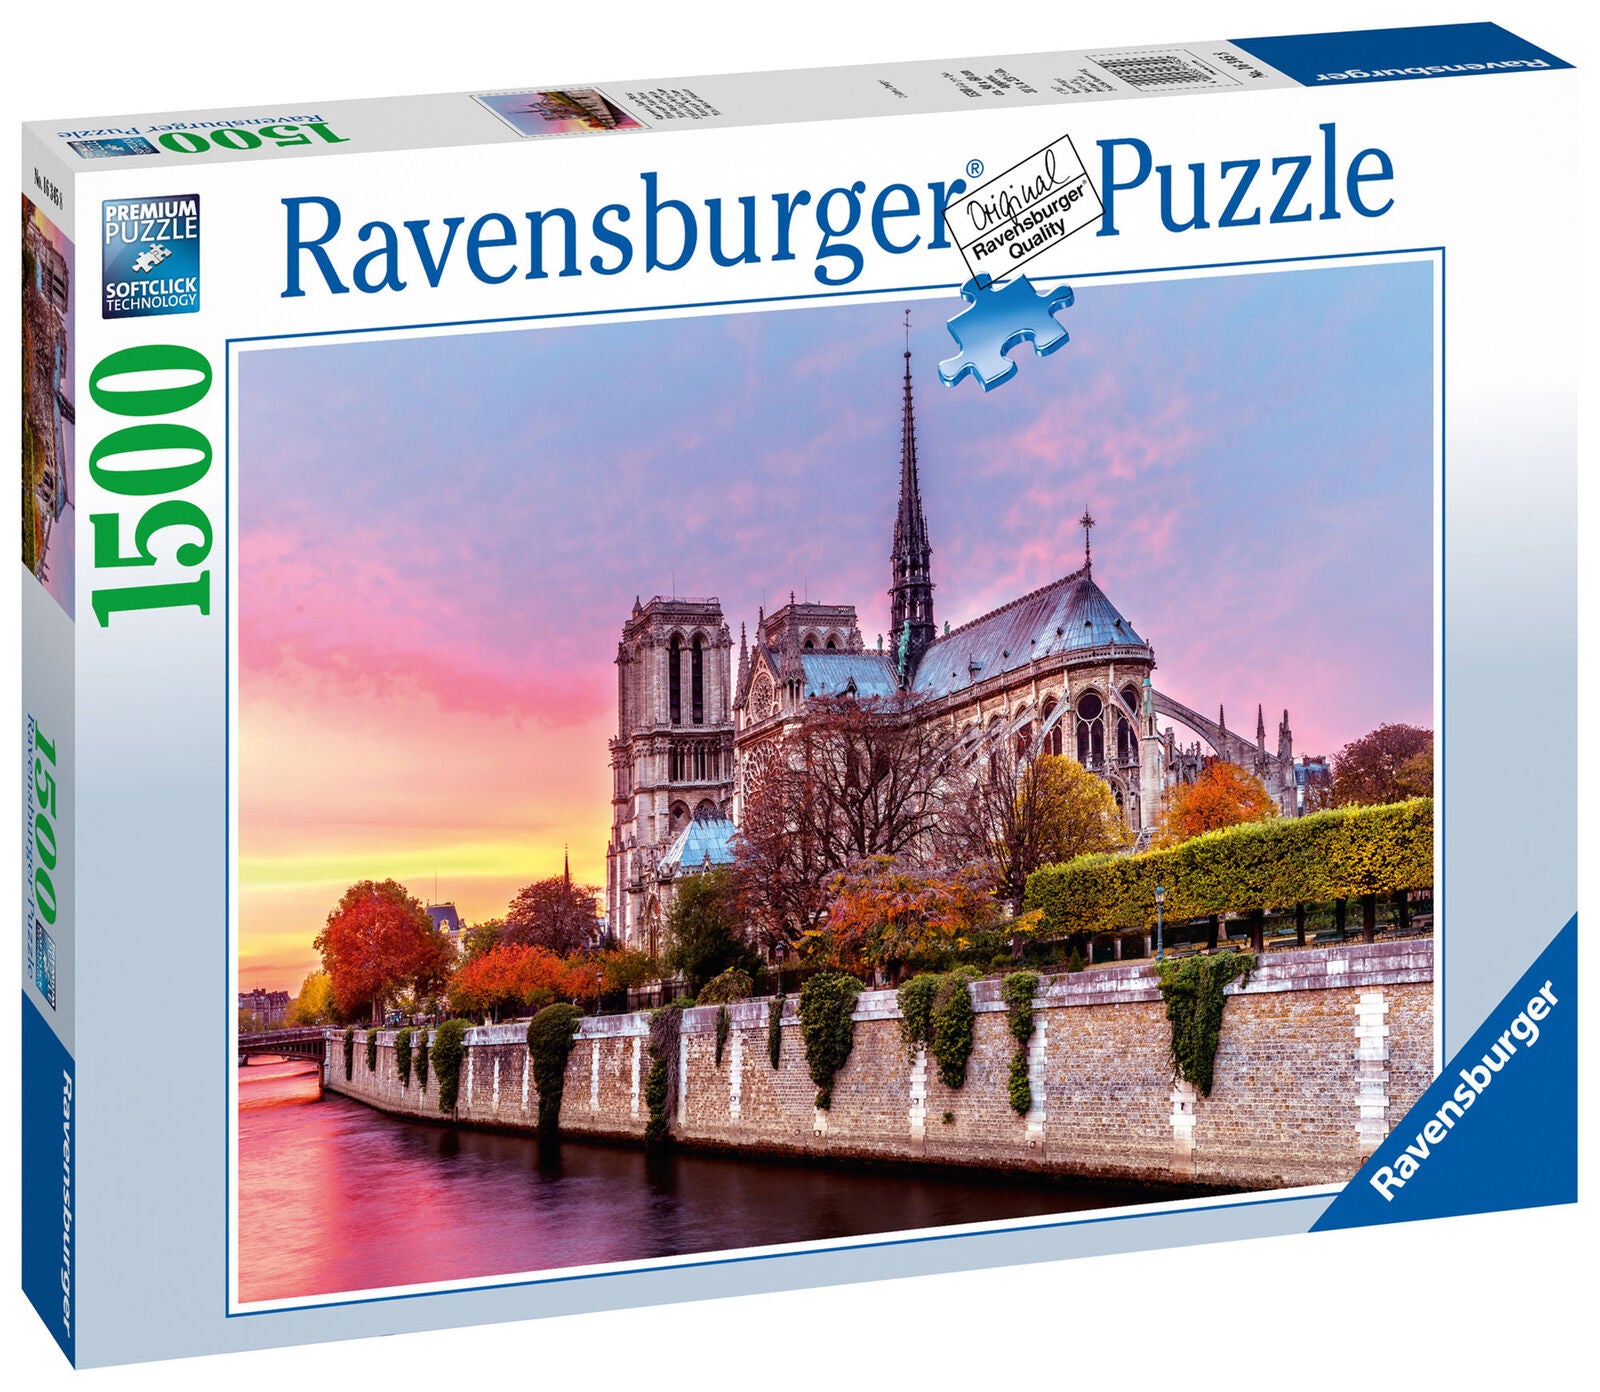 16345 Ravensburger Picturesque Notre Dame Jigsaw Puzzle 1500pcs Age 12 Years+